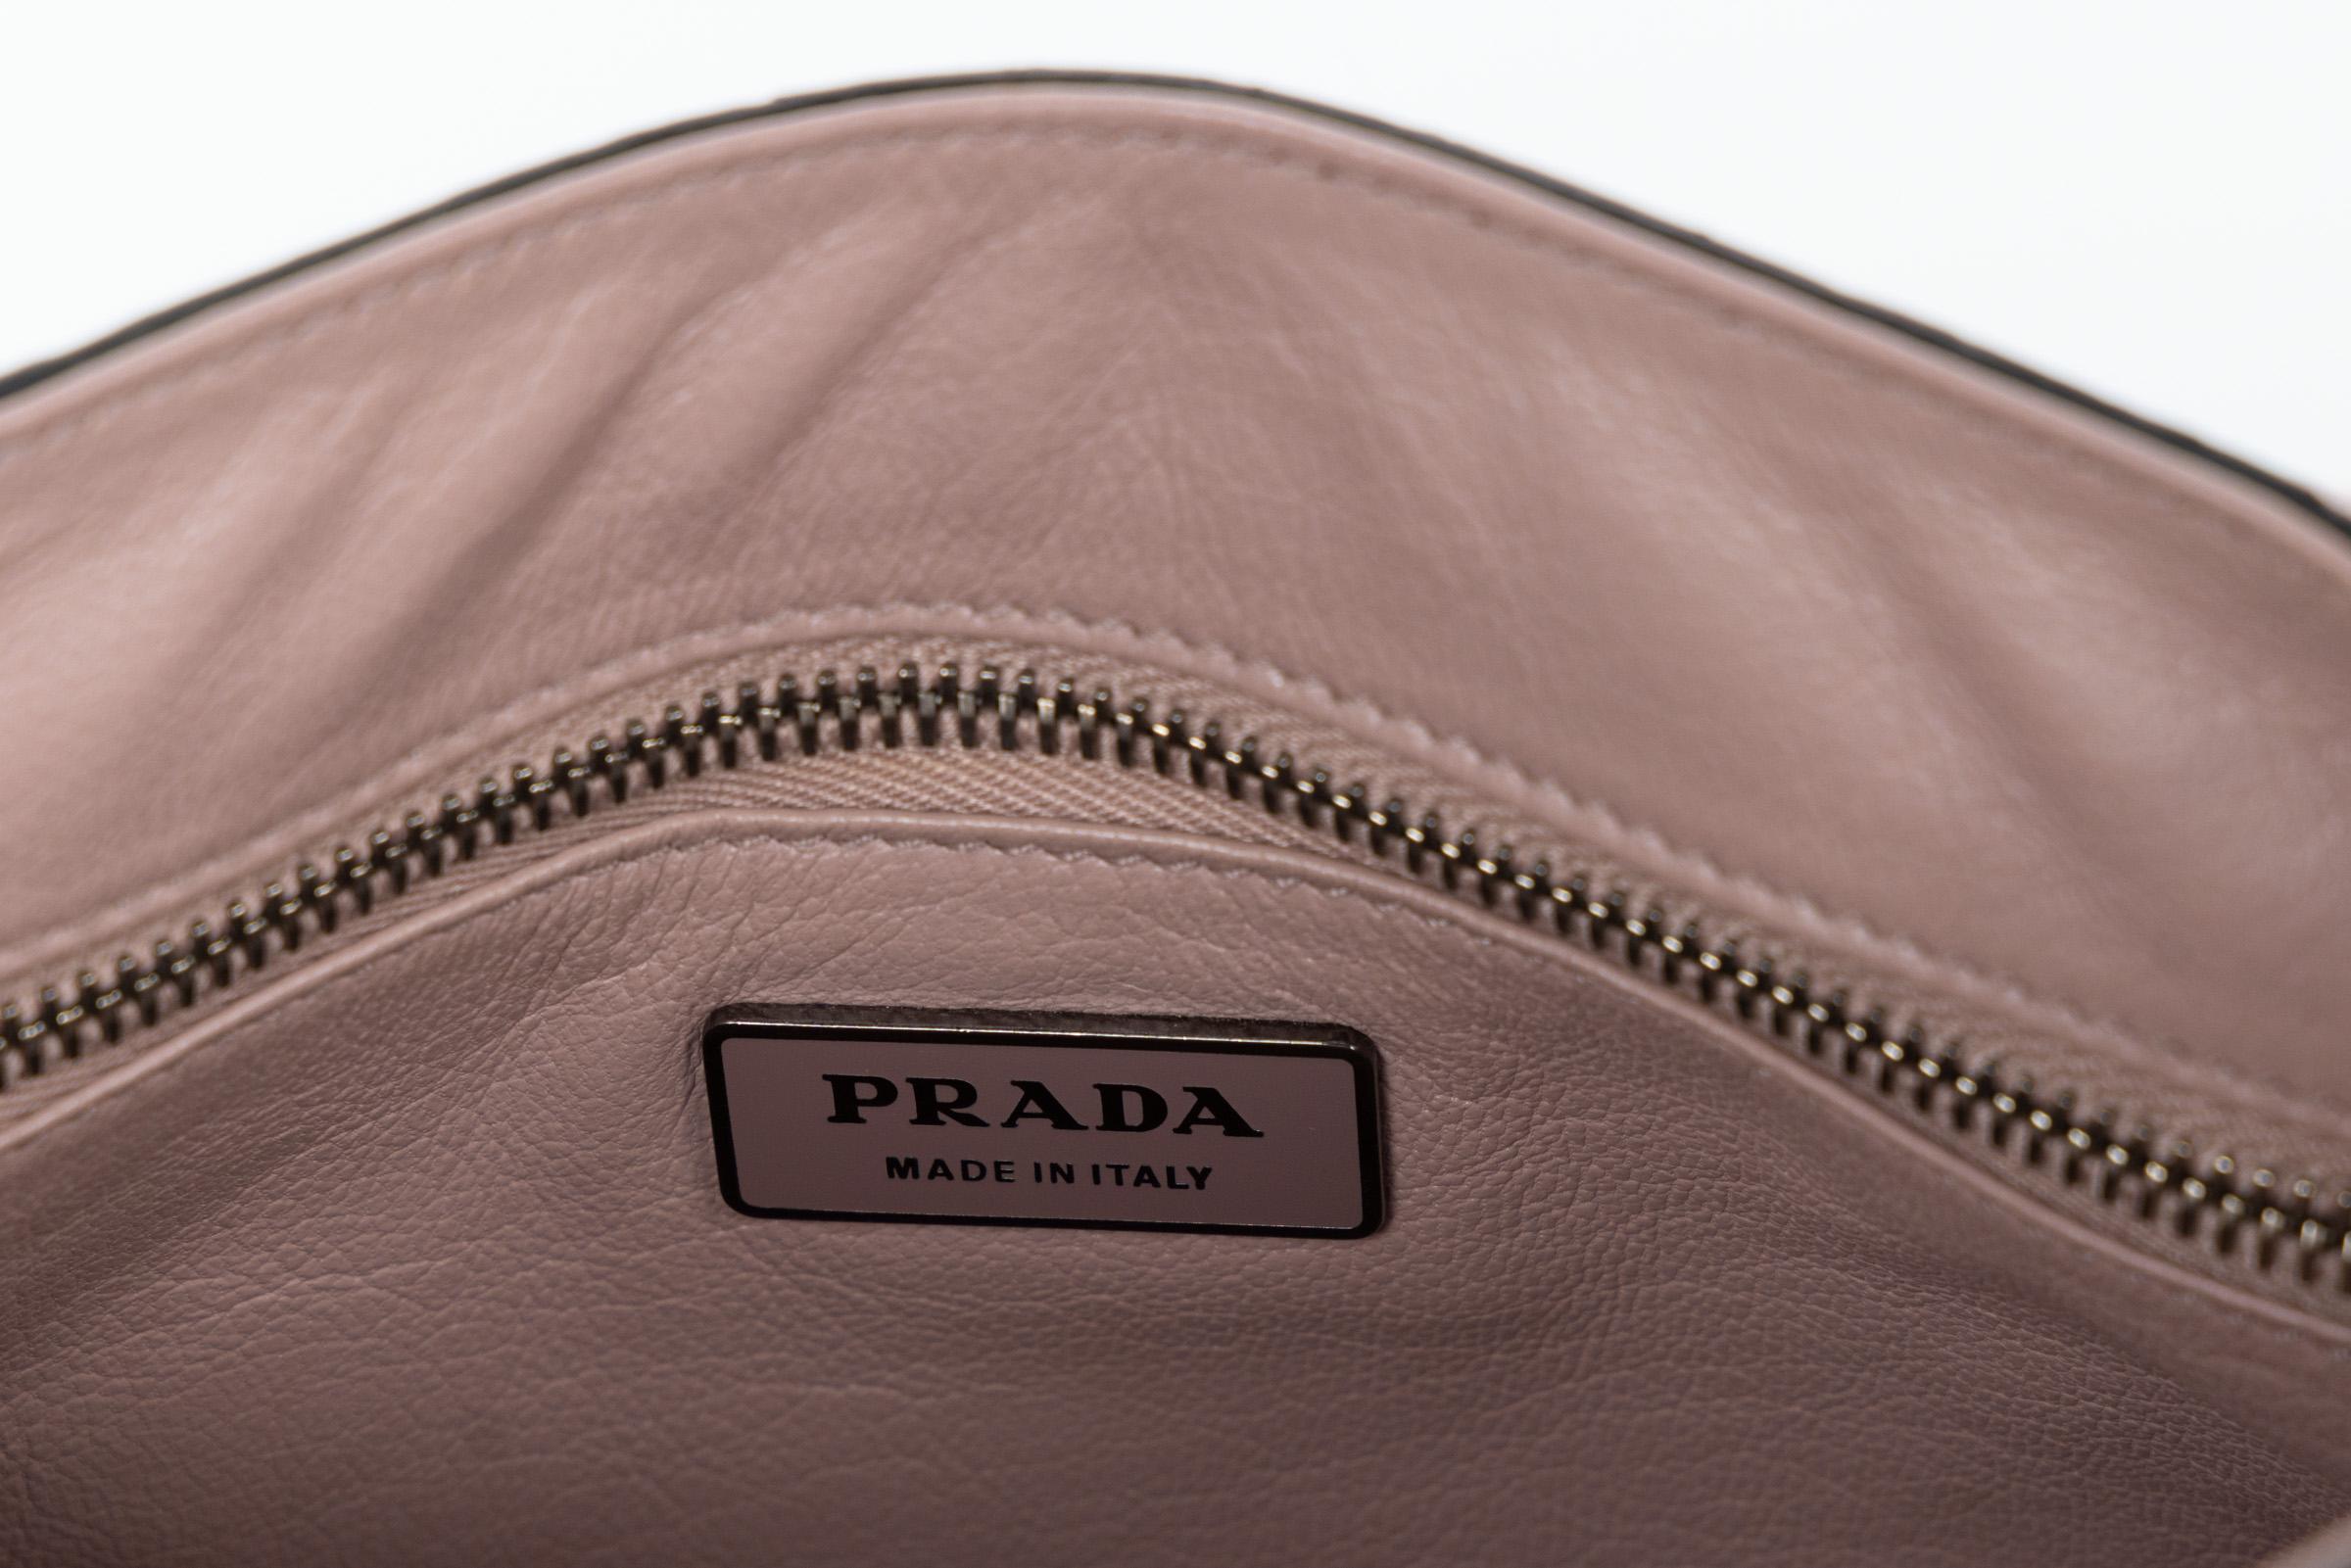 Prada F/W 2004 Crocodile Jeweled Bag Limited Edition For Sale 1